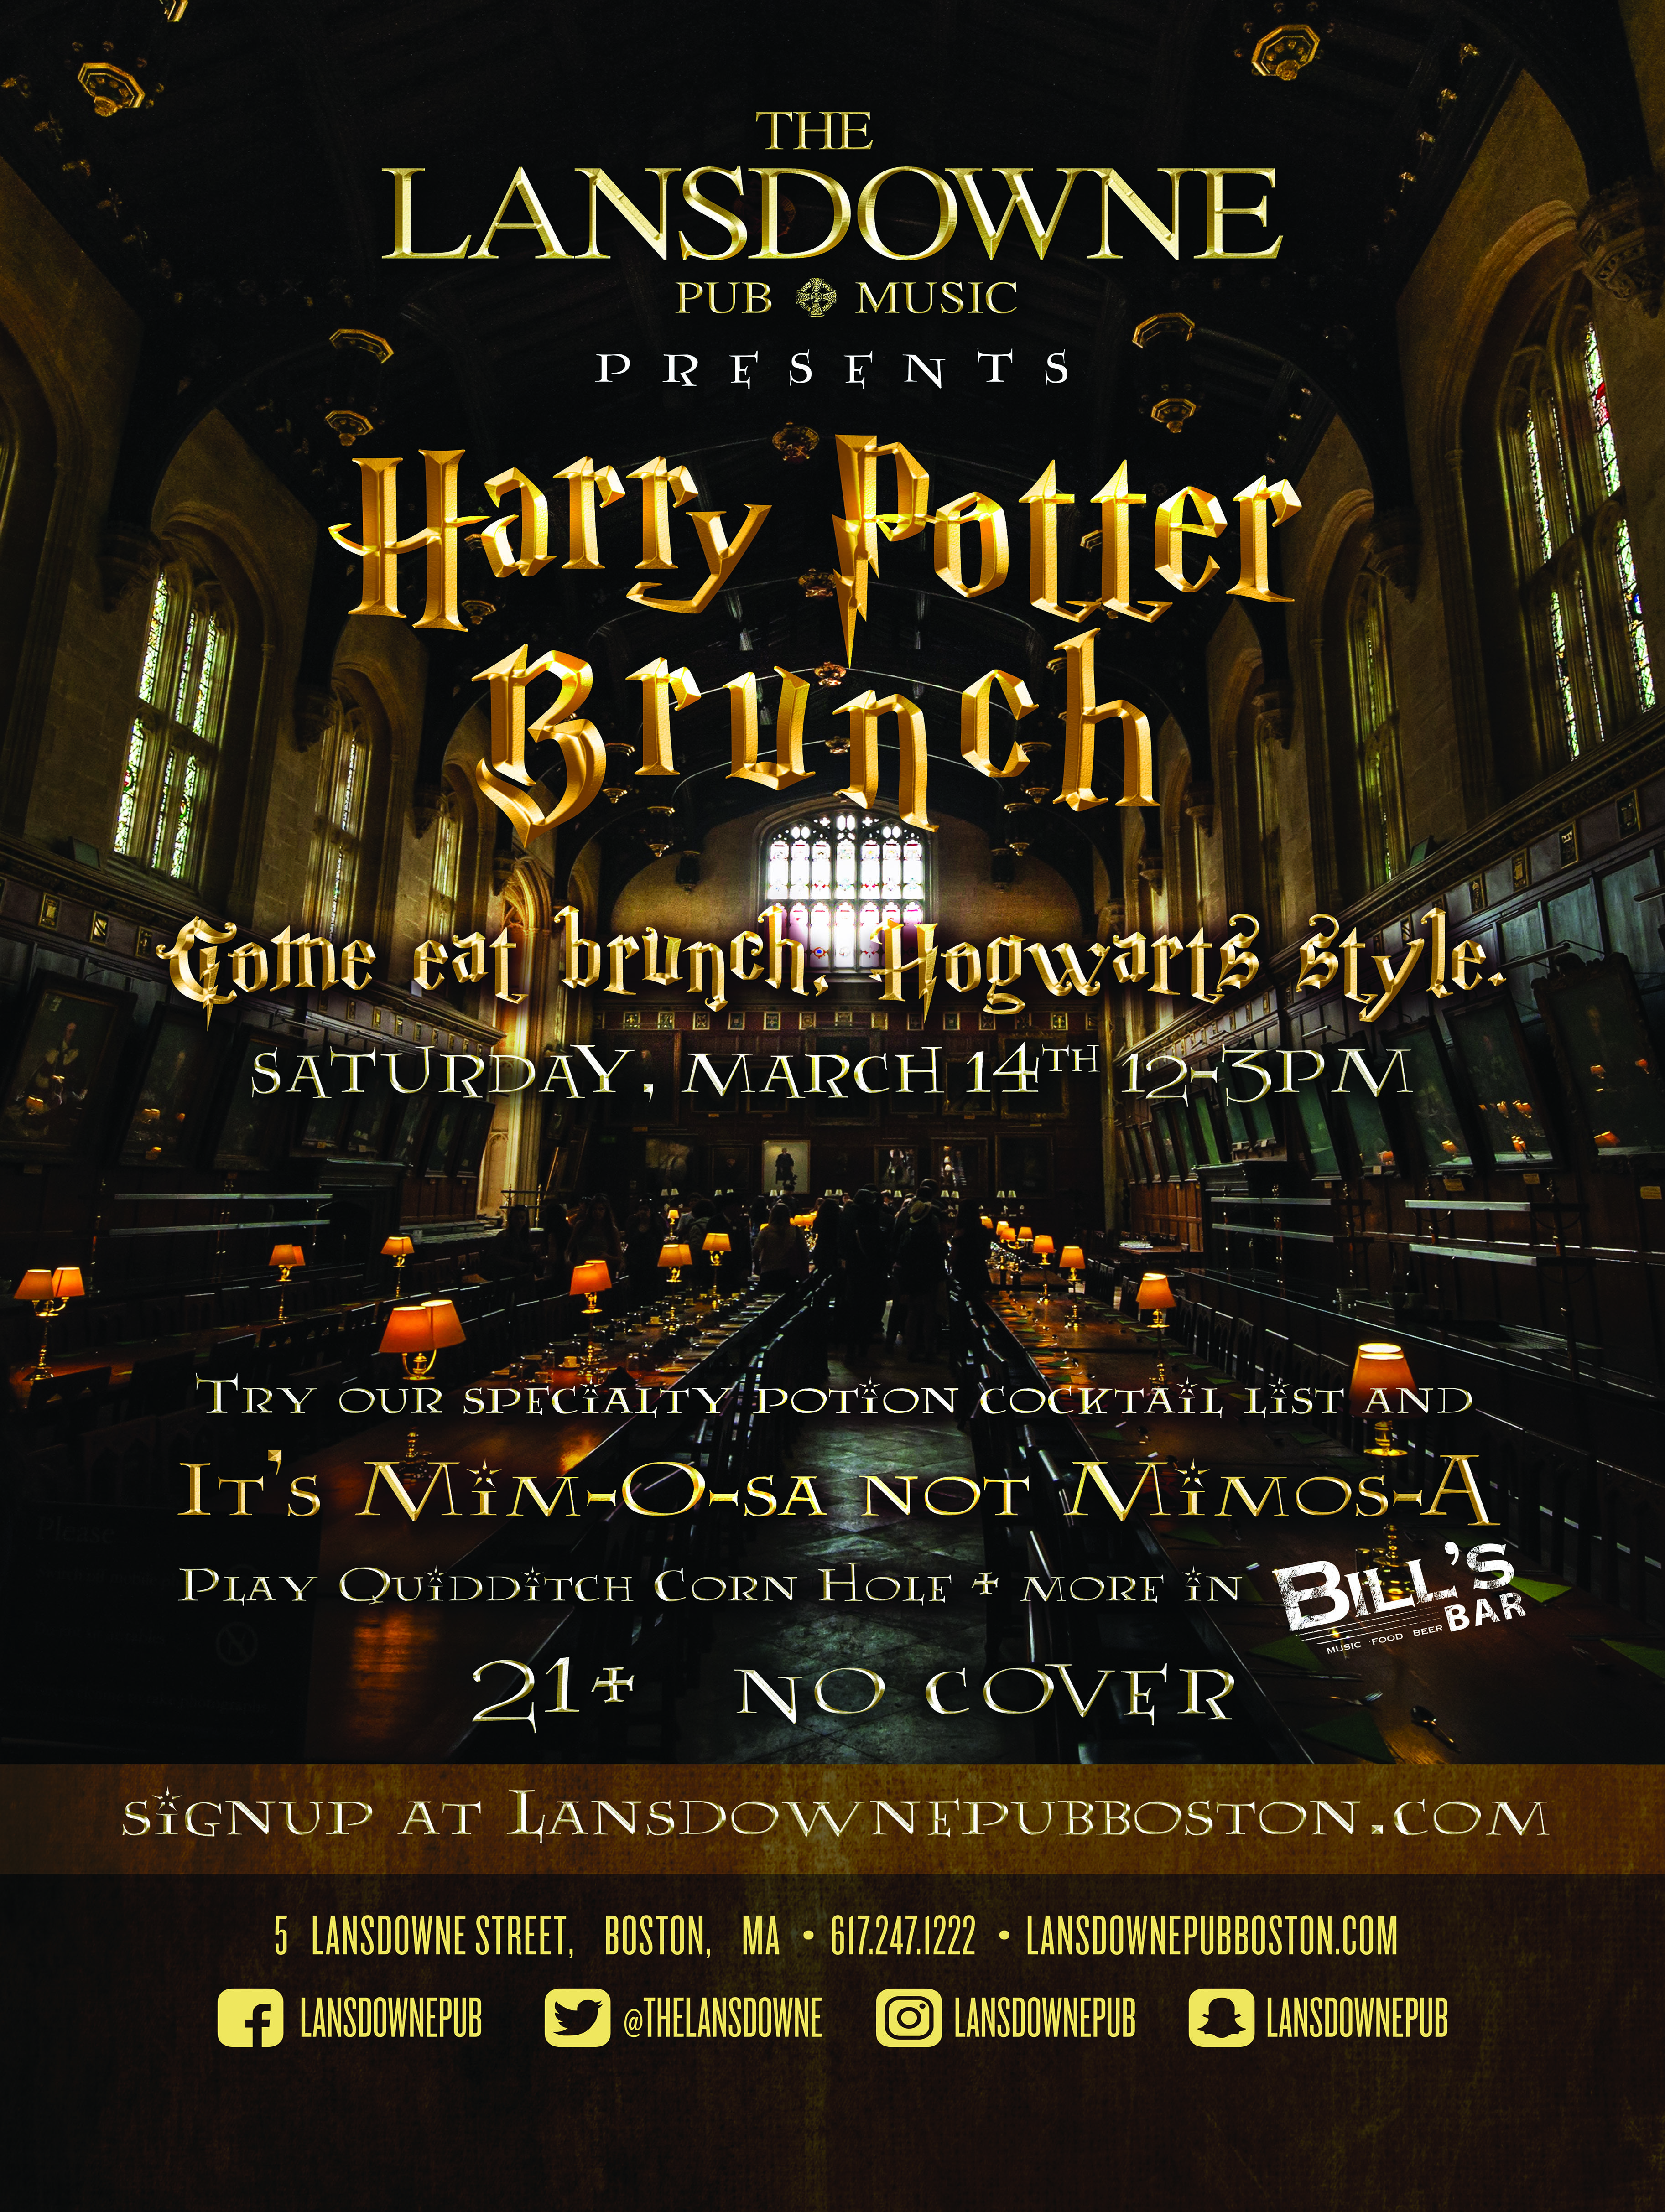 Harry Potter Brunch at Lansdowne Pub [03/07/20]